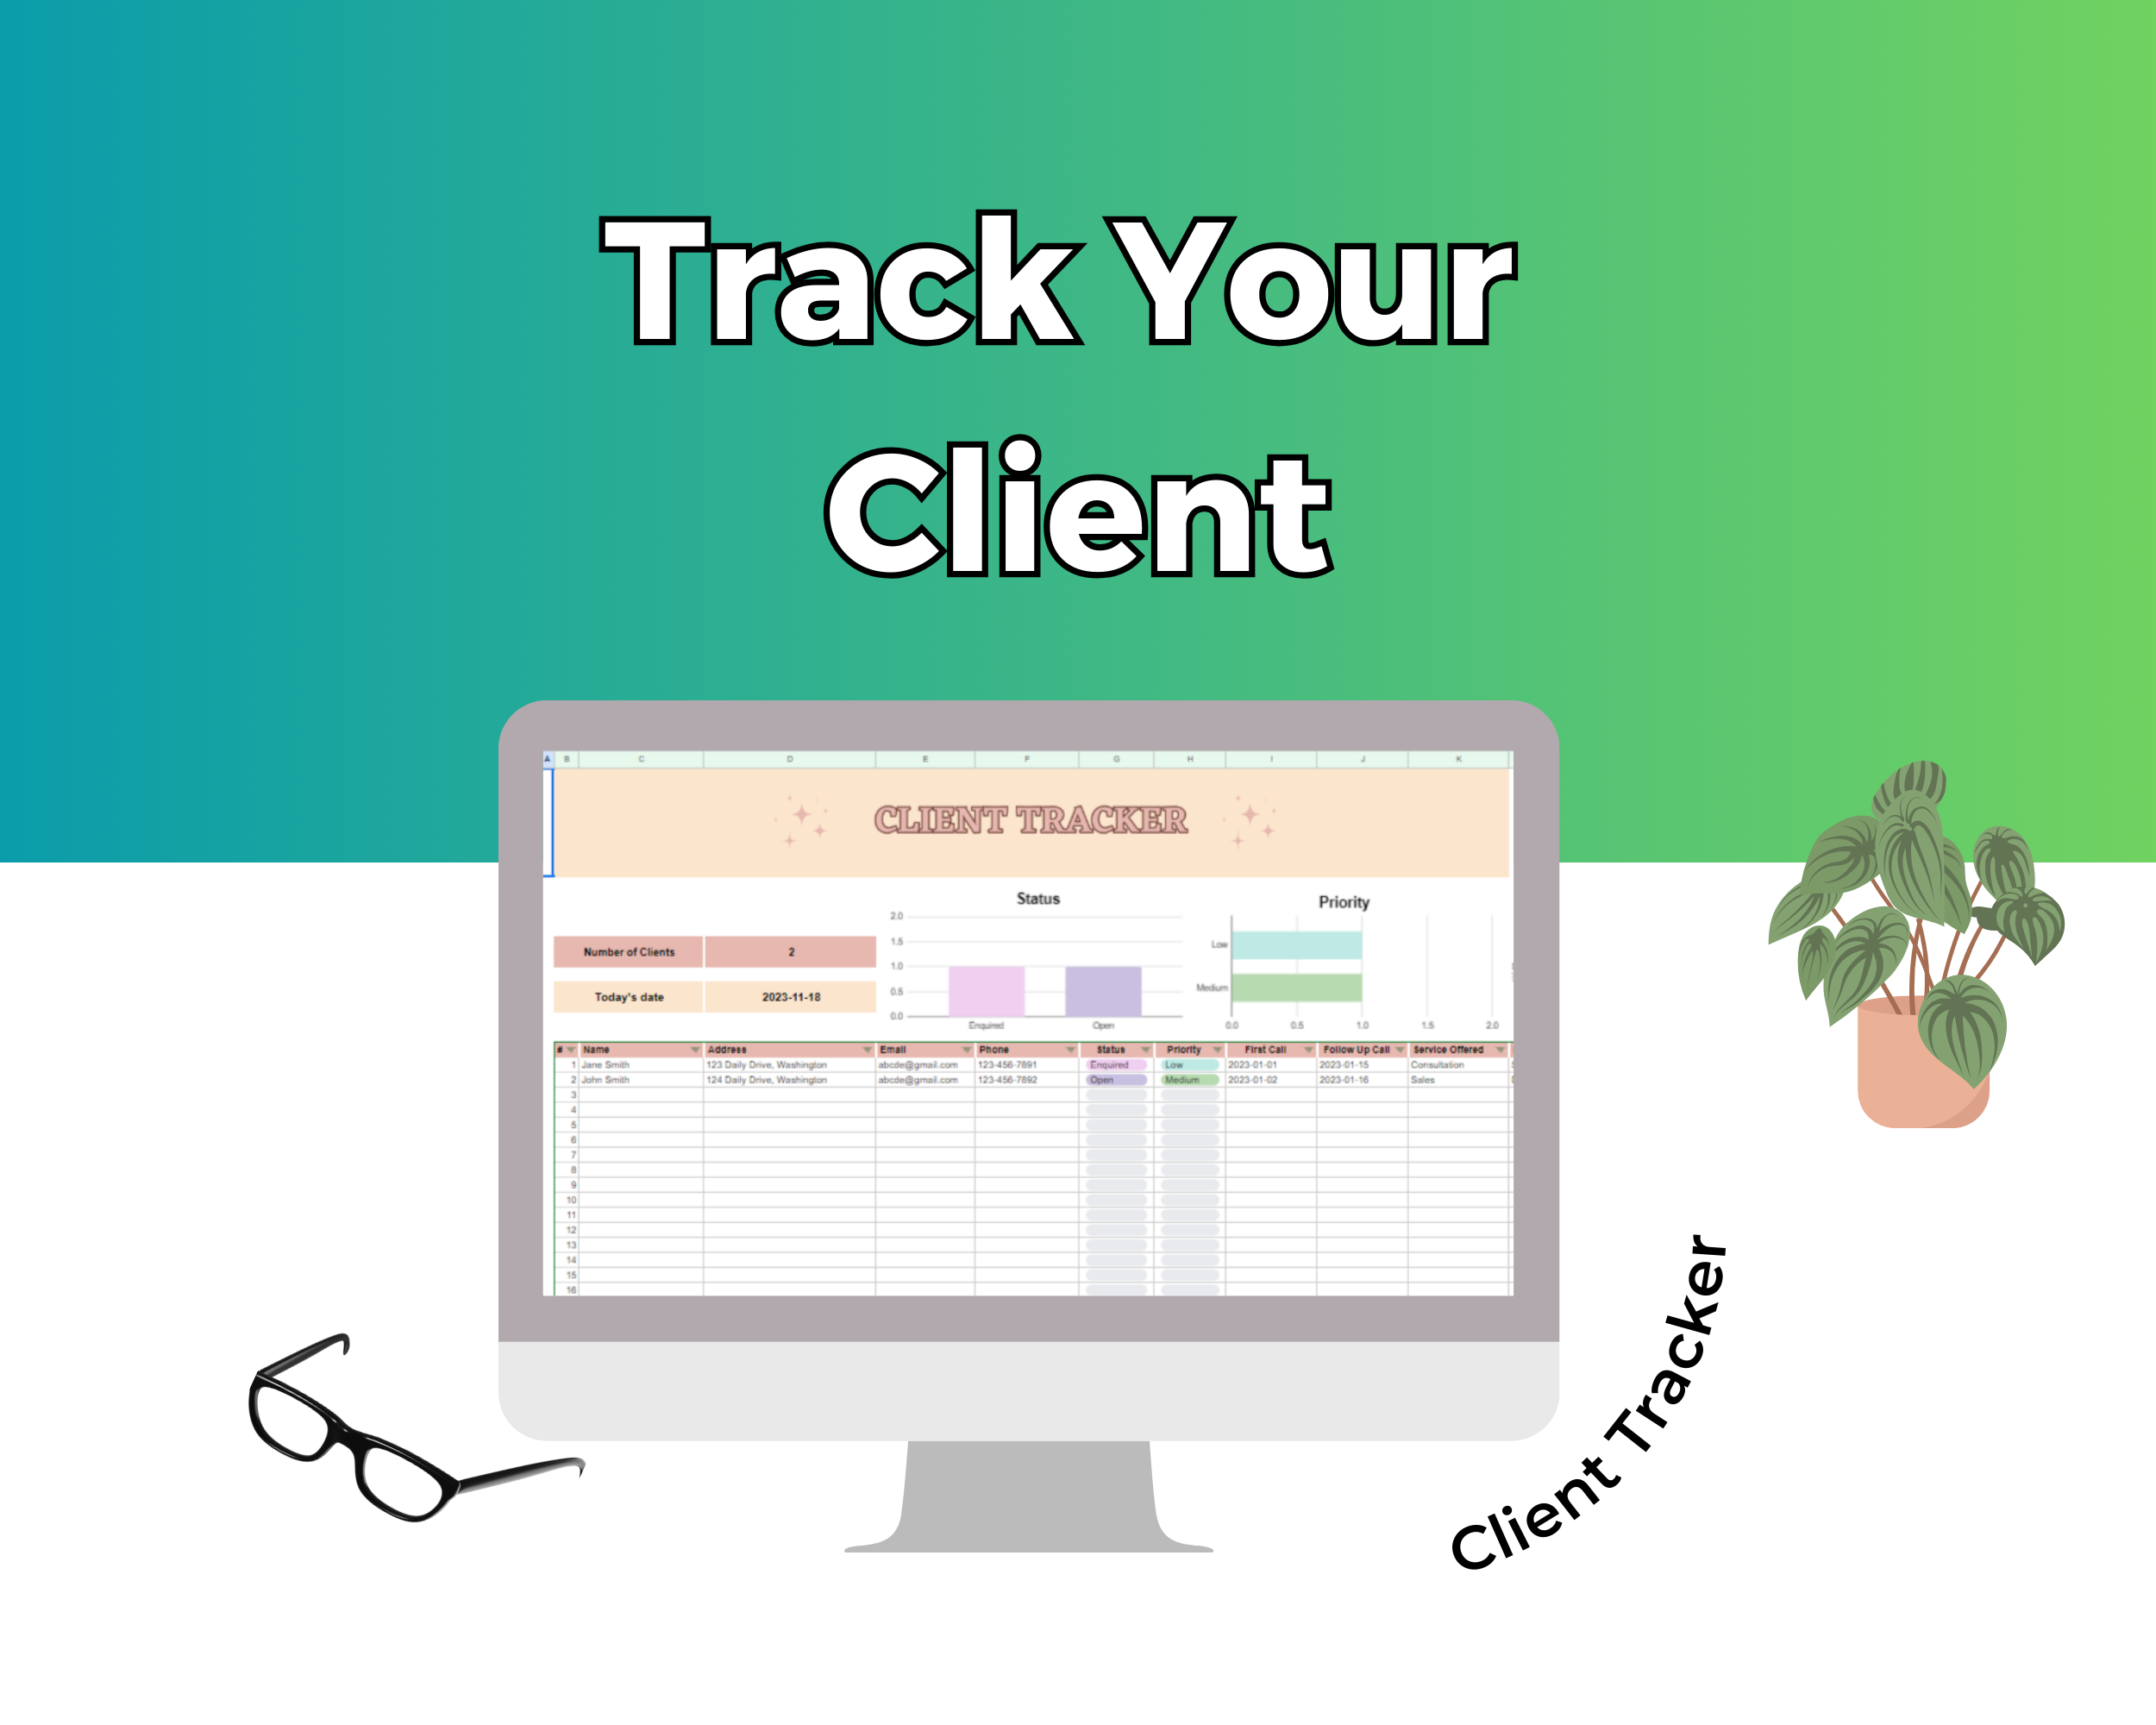 Client Tracker Google Spreadsheet | Client Tracker Google Sheets